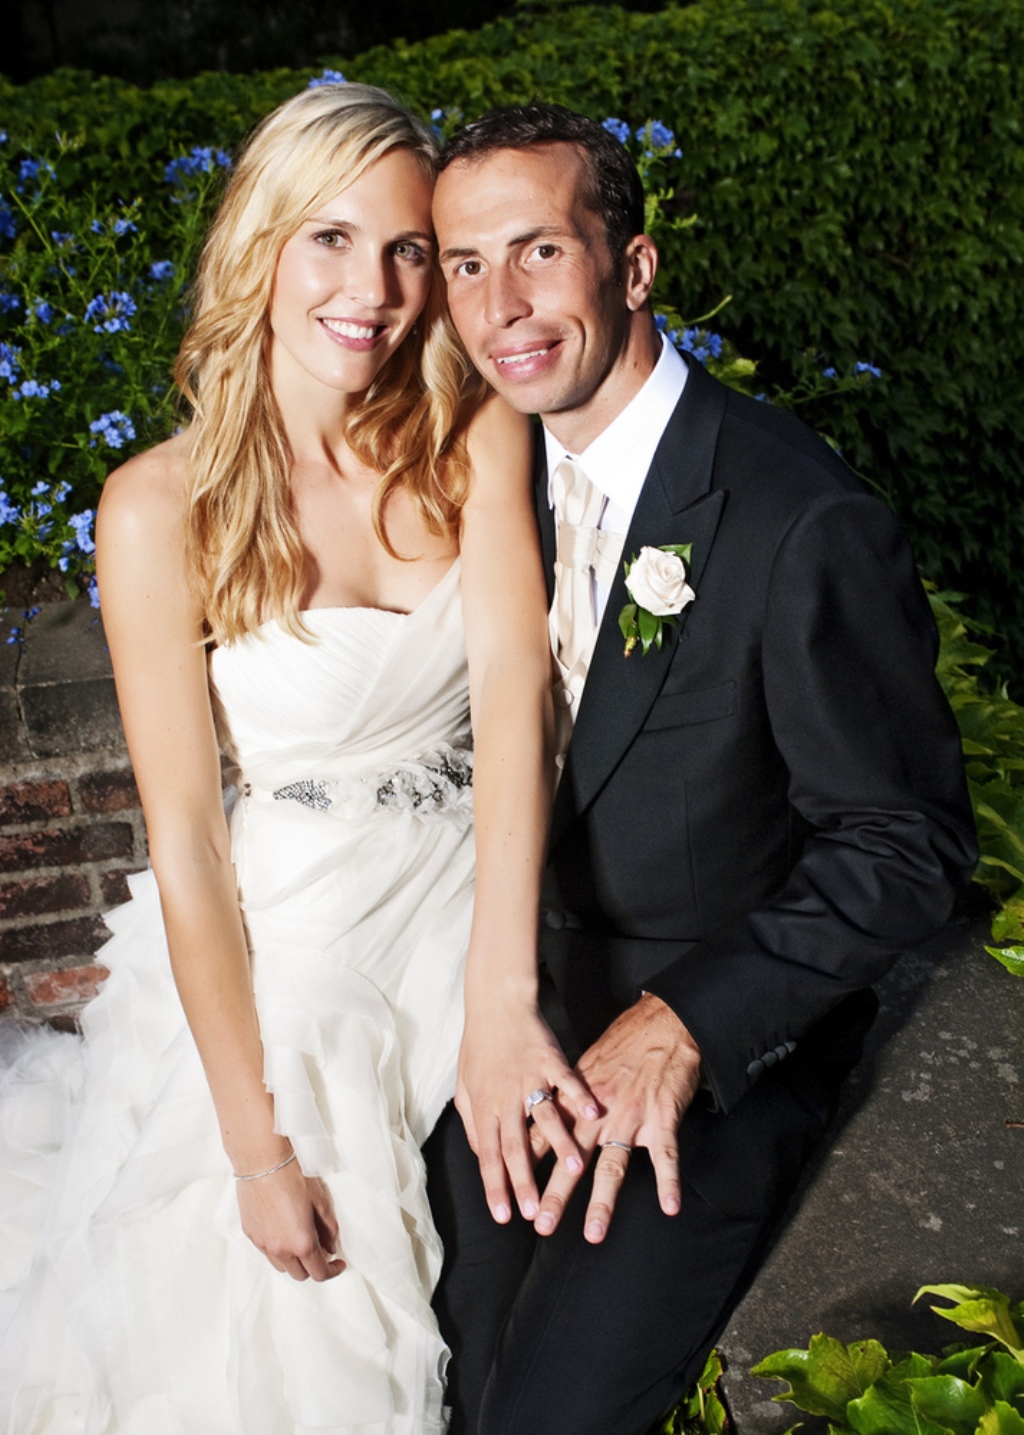 Nicole And Radek Wedding Rings Tennis Photo 31498328